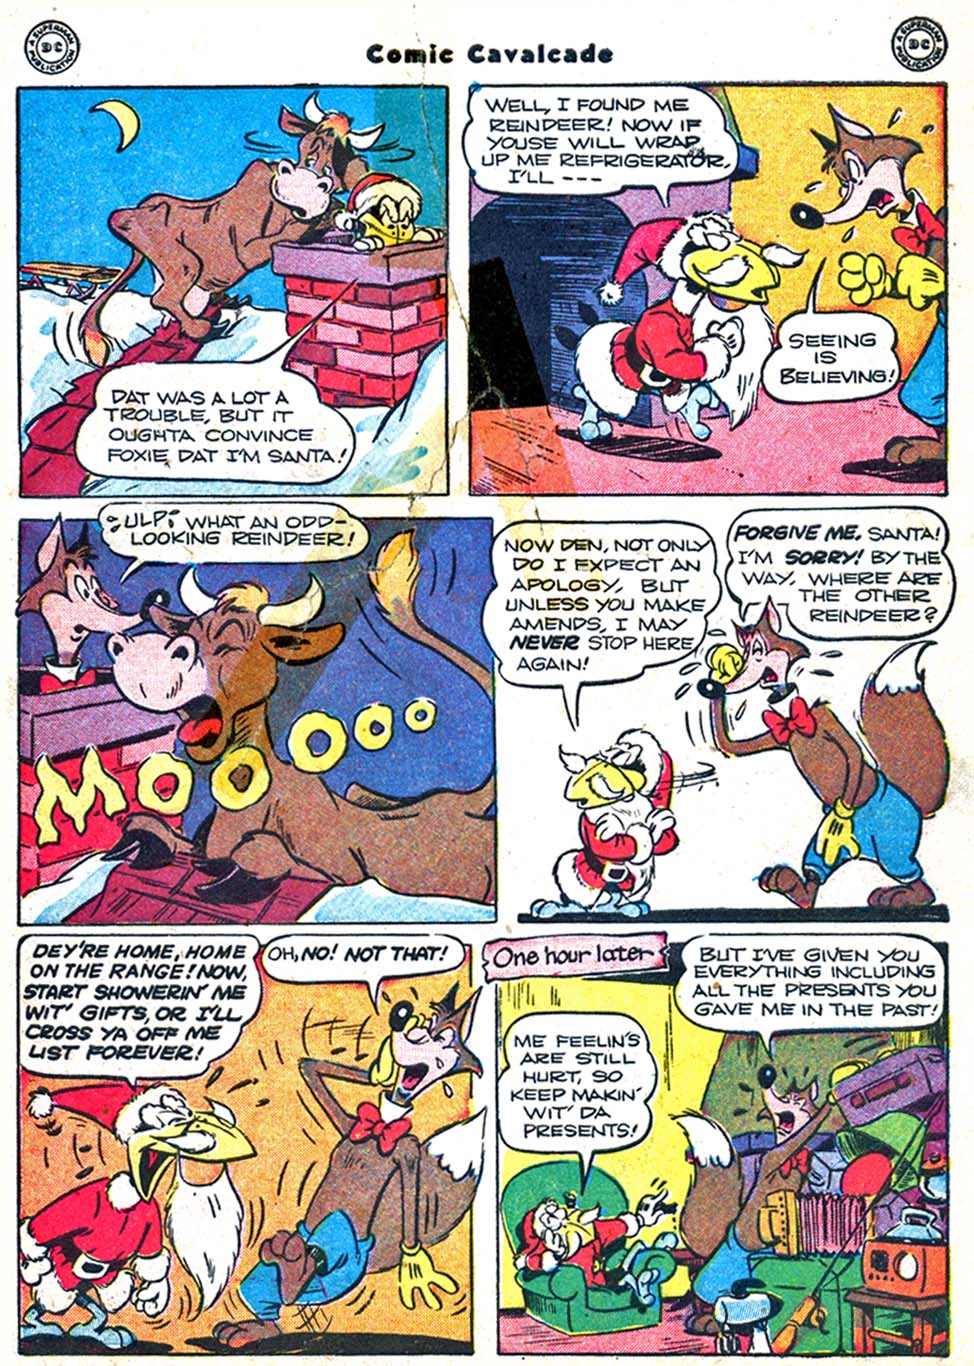 Comic Cavalcade issue 31 - Page 9